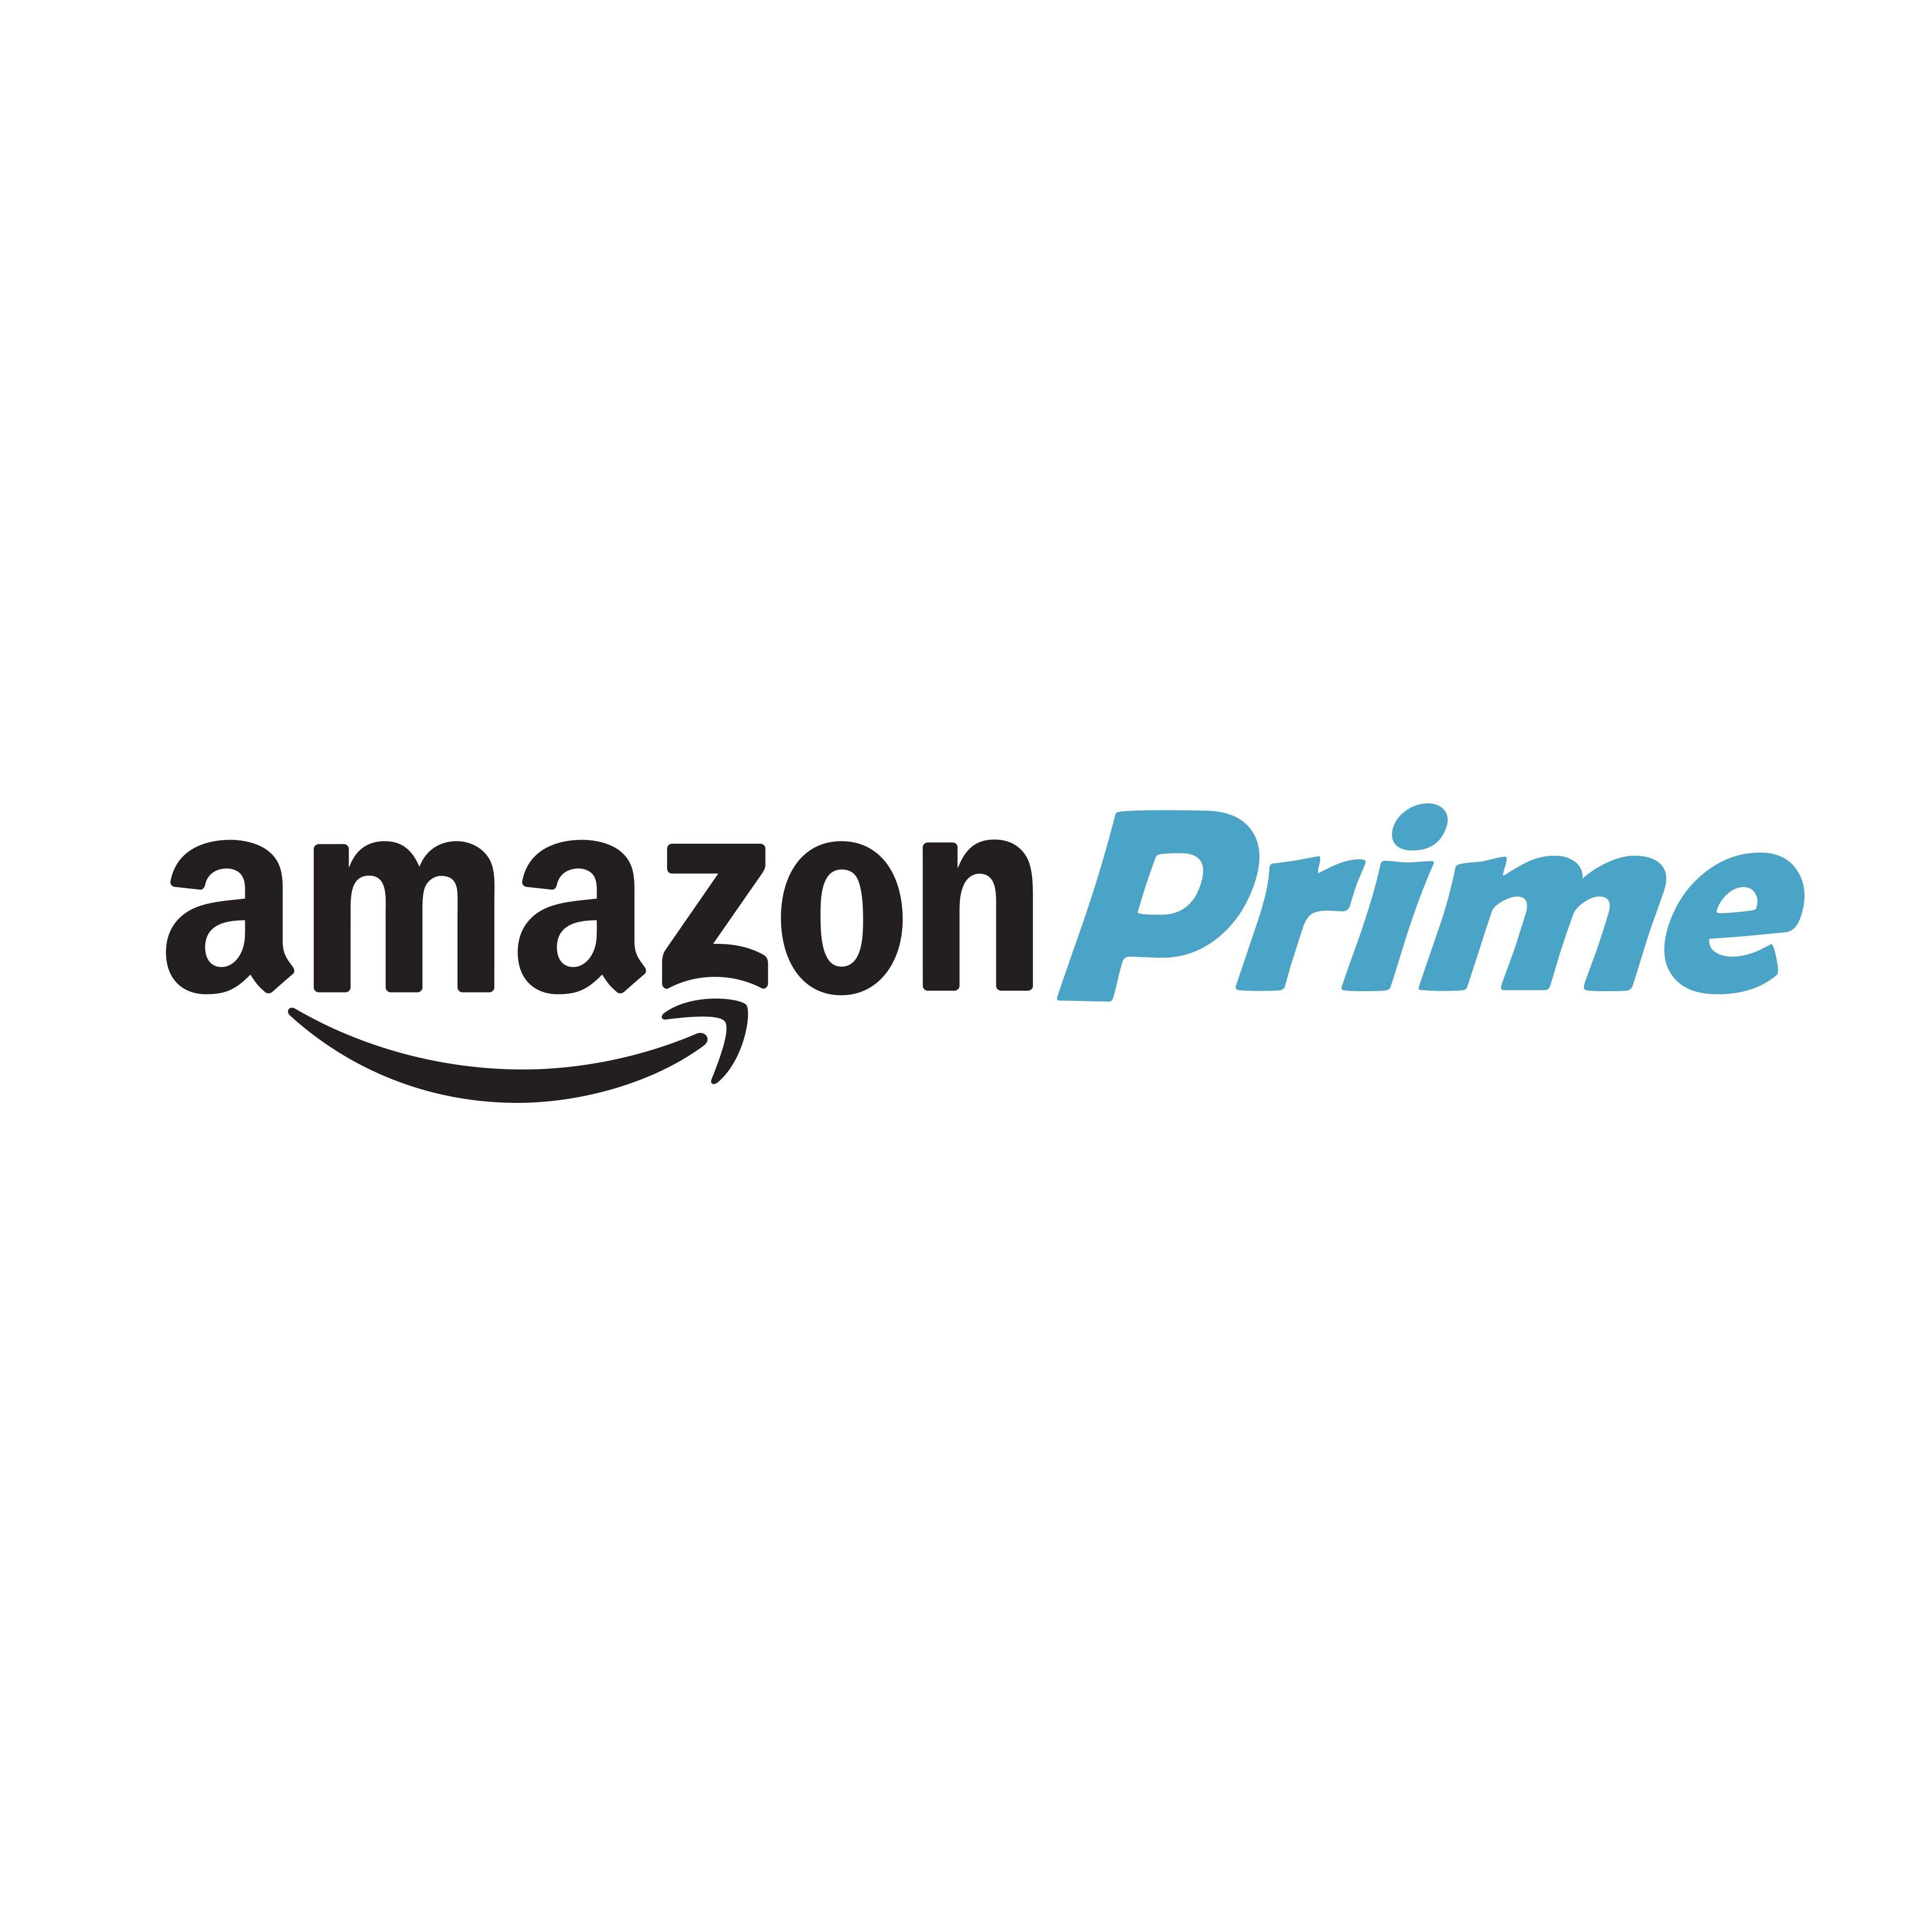 Amazon Shopping App Logo - Amazon Launches the International Shopping Experience in the Amazon ...